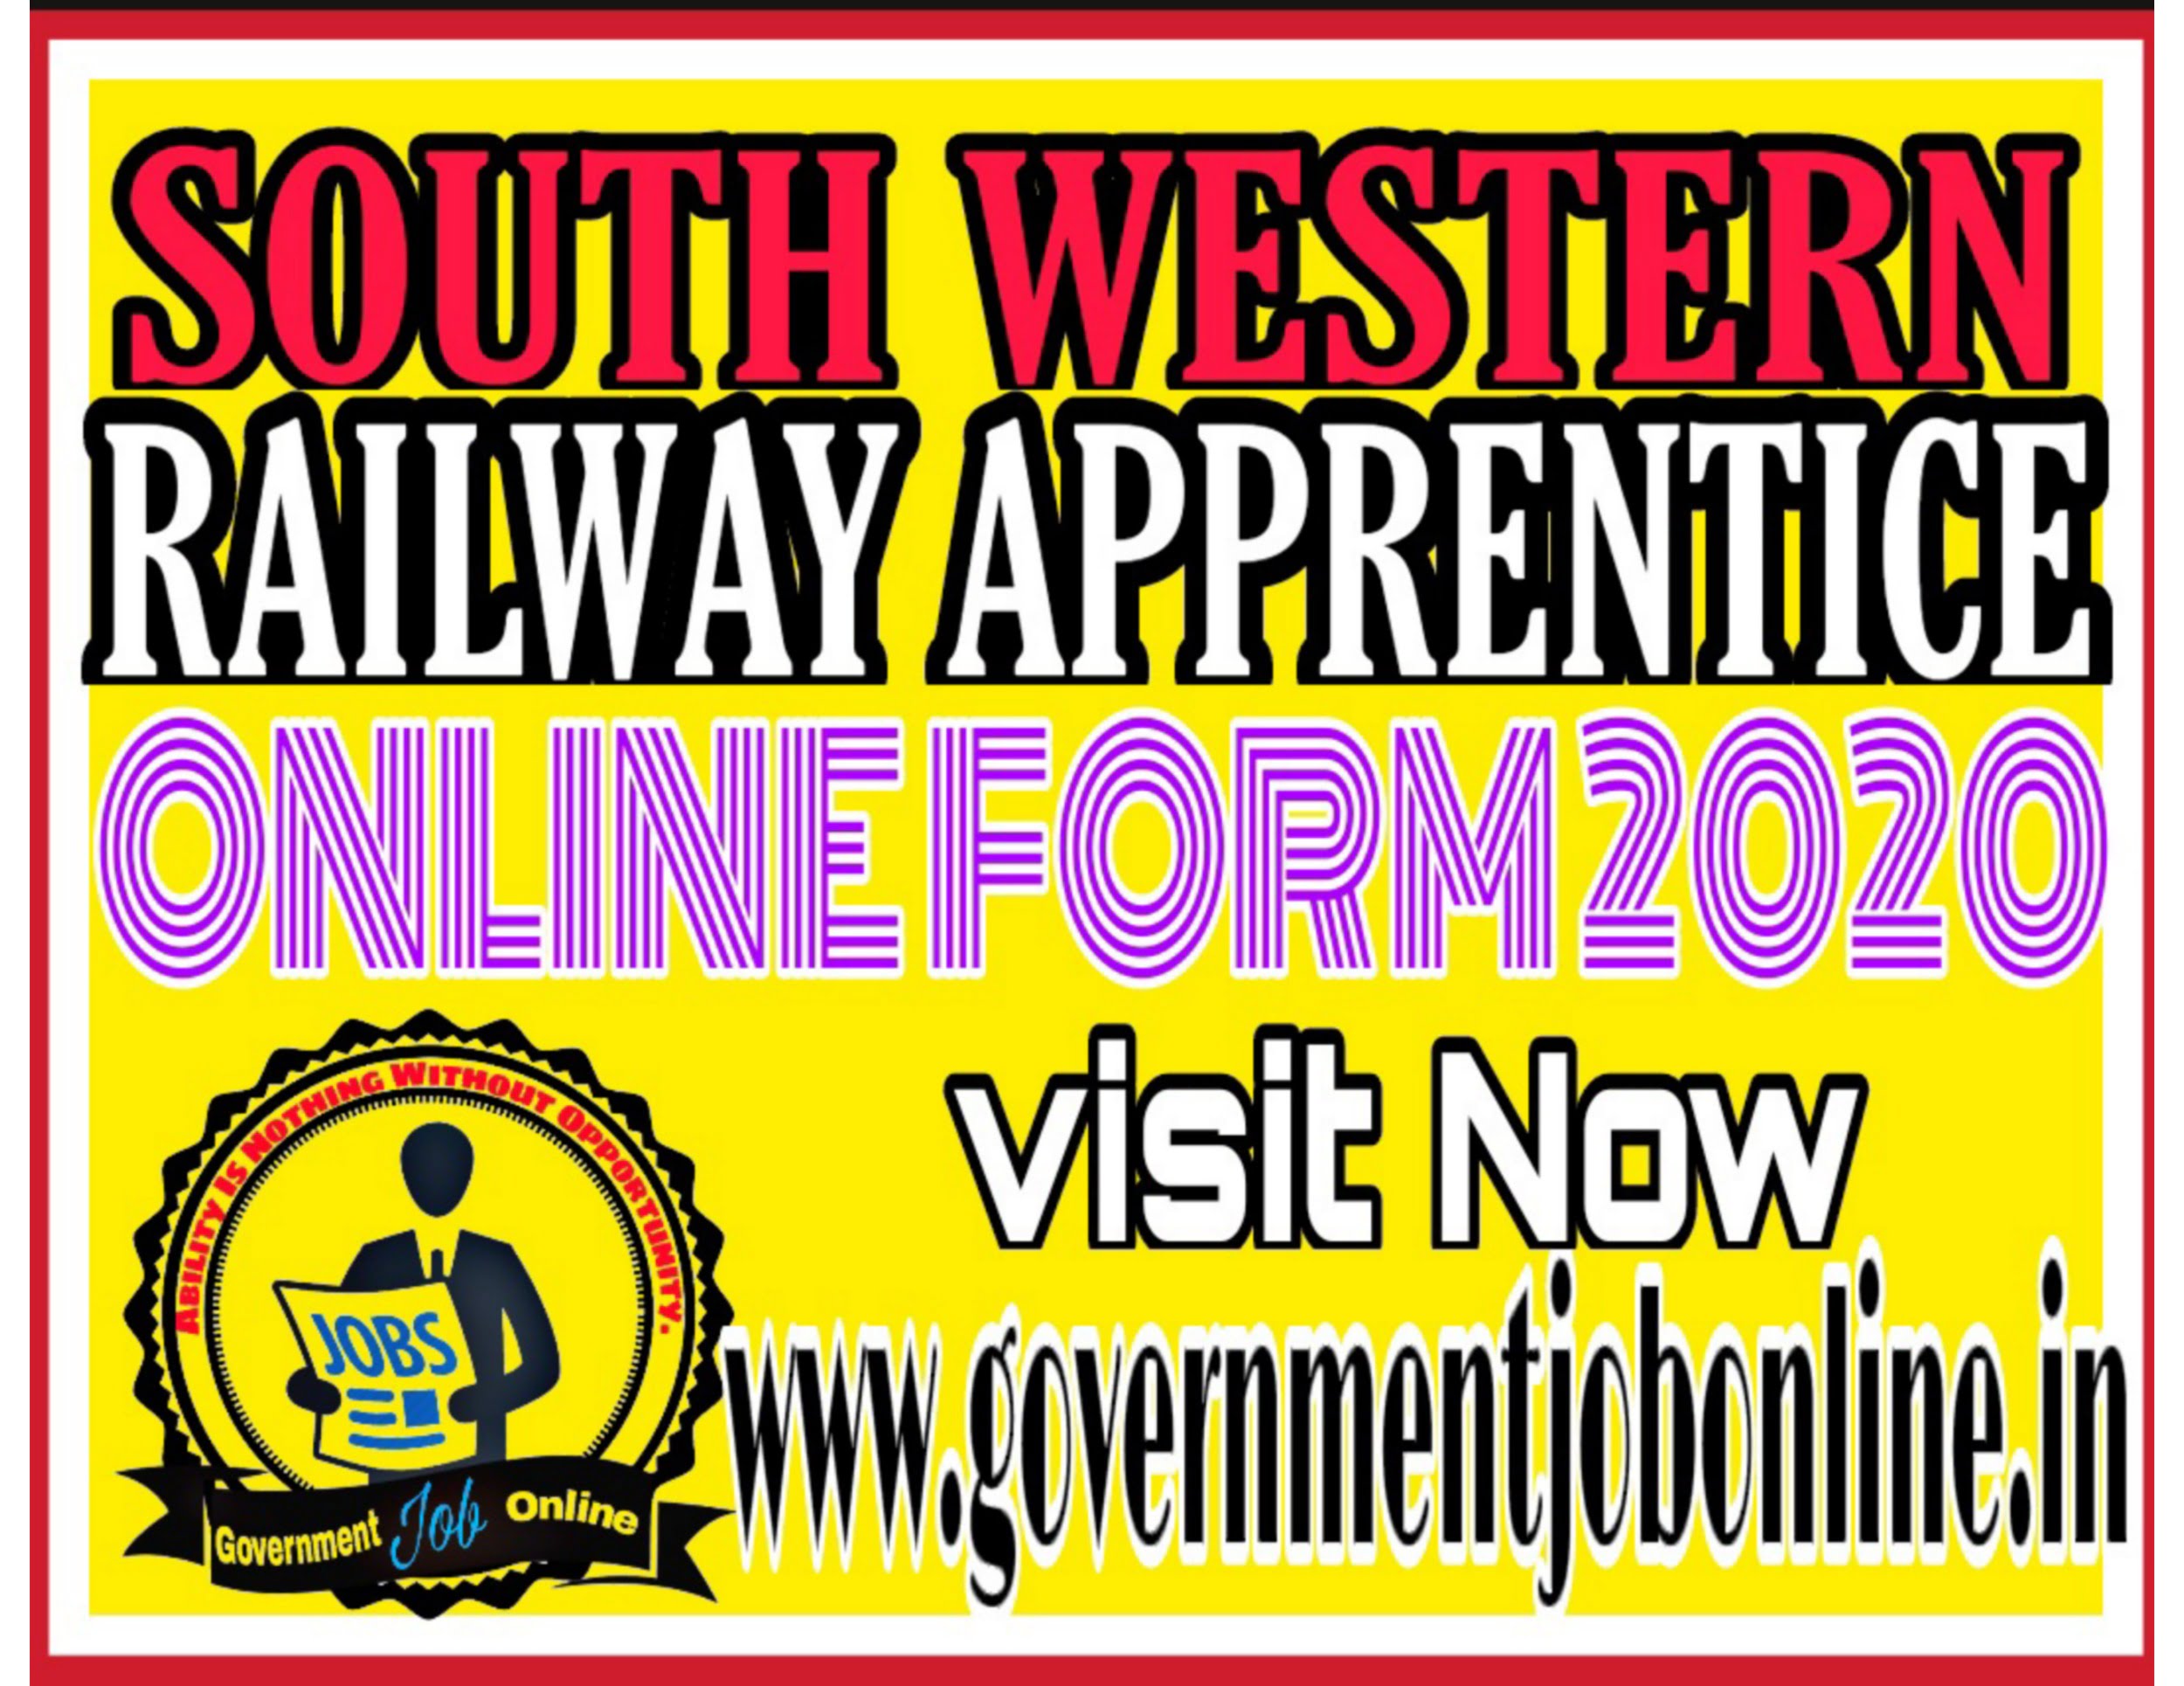 Railway SWR Apprentice Online From 2020, SWR RRC Apprentice 2021 Online Form